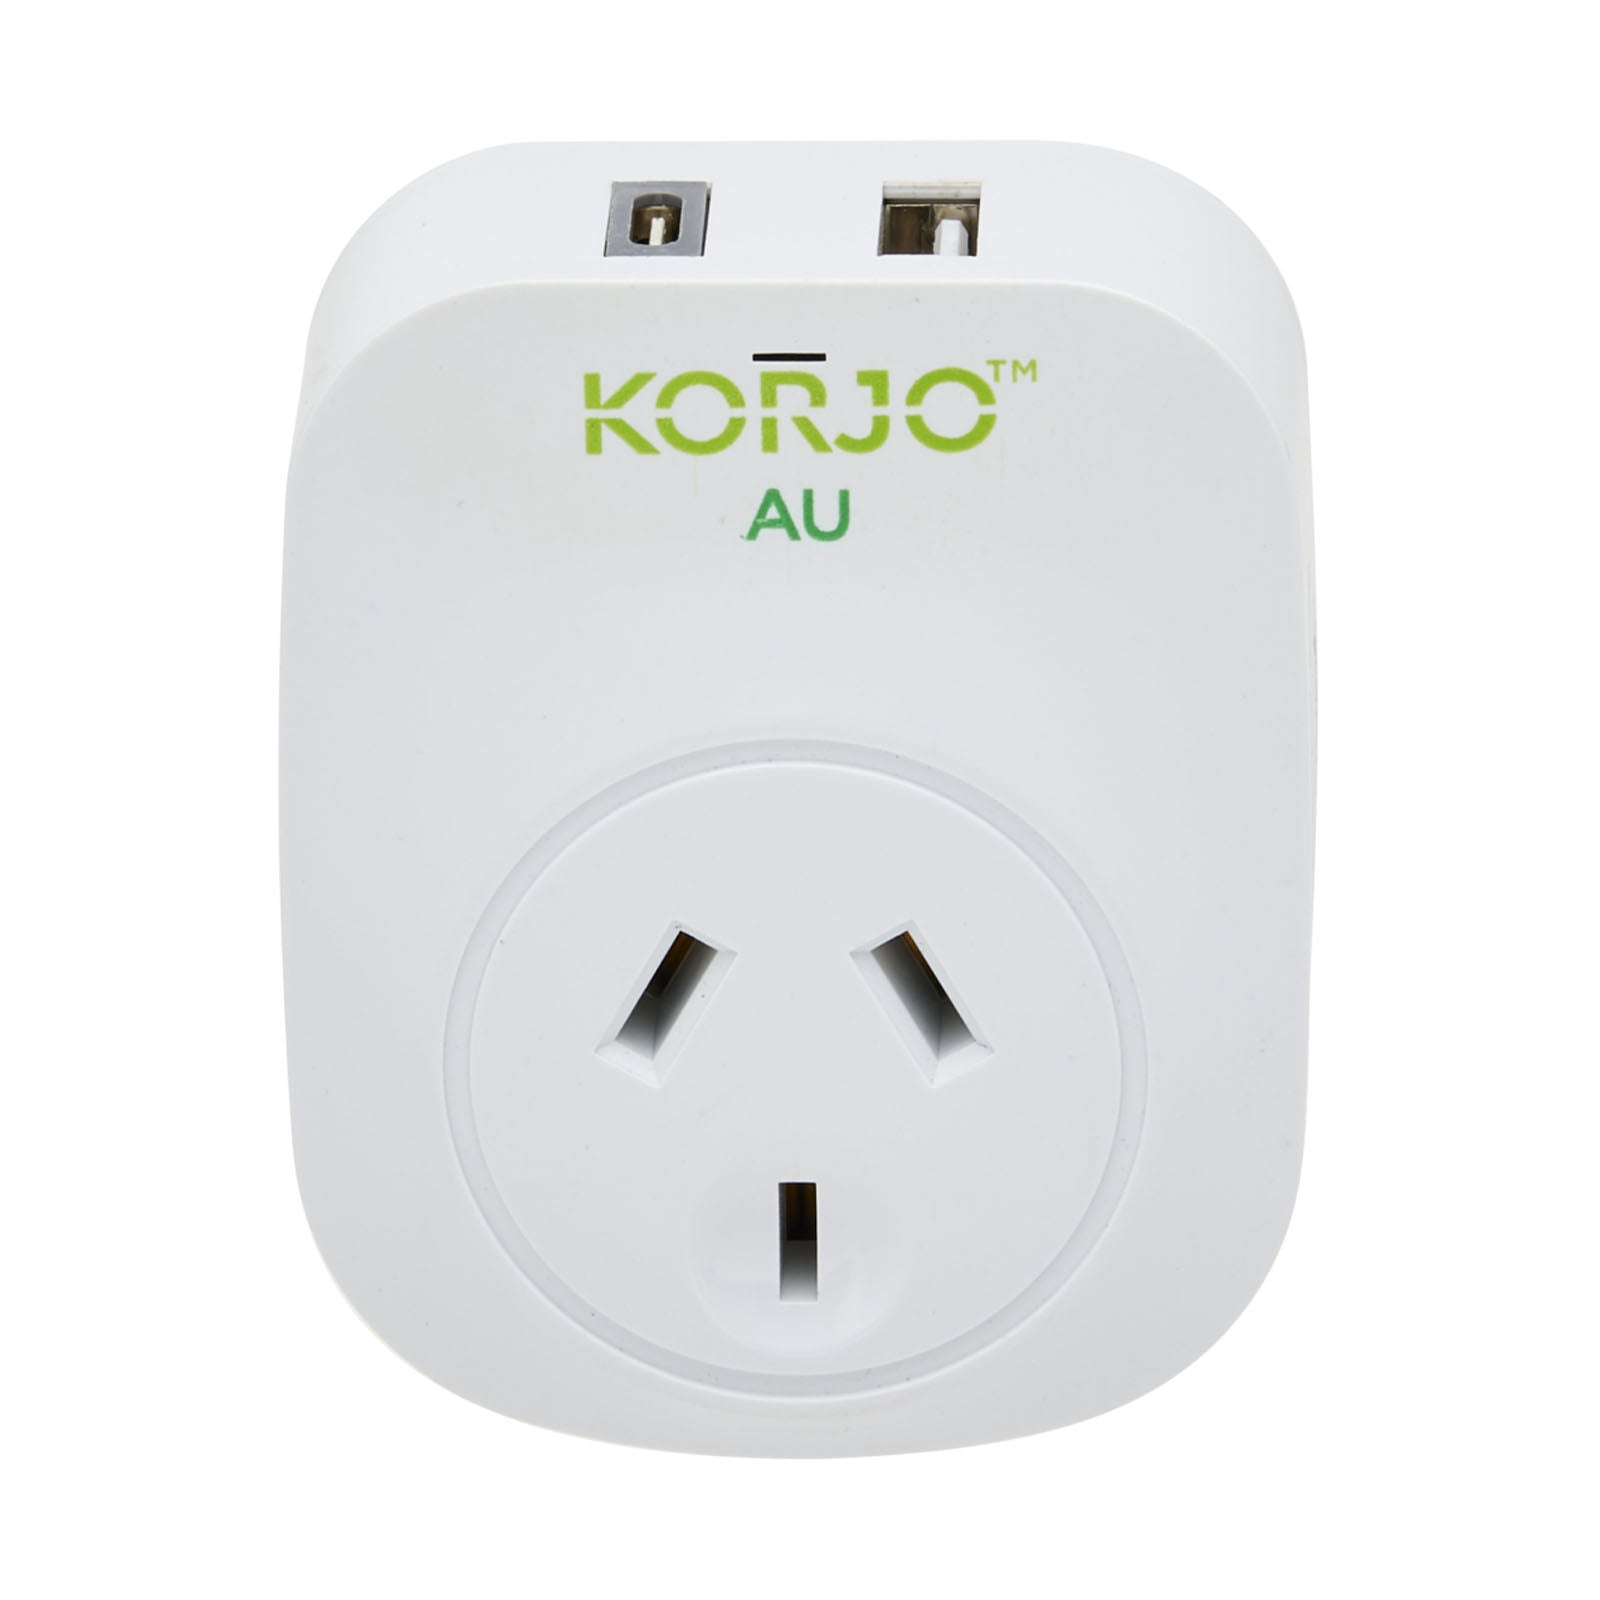 Korjo-Travel-Adaptor-Usb-Port-A-And-C-For-Australia-Socket